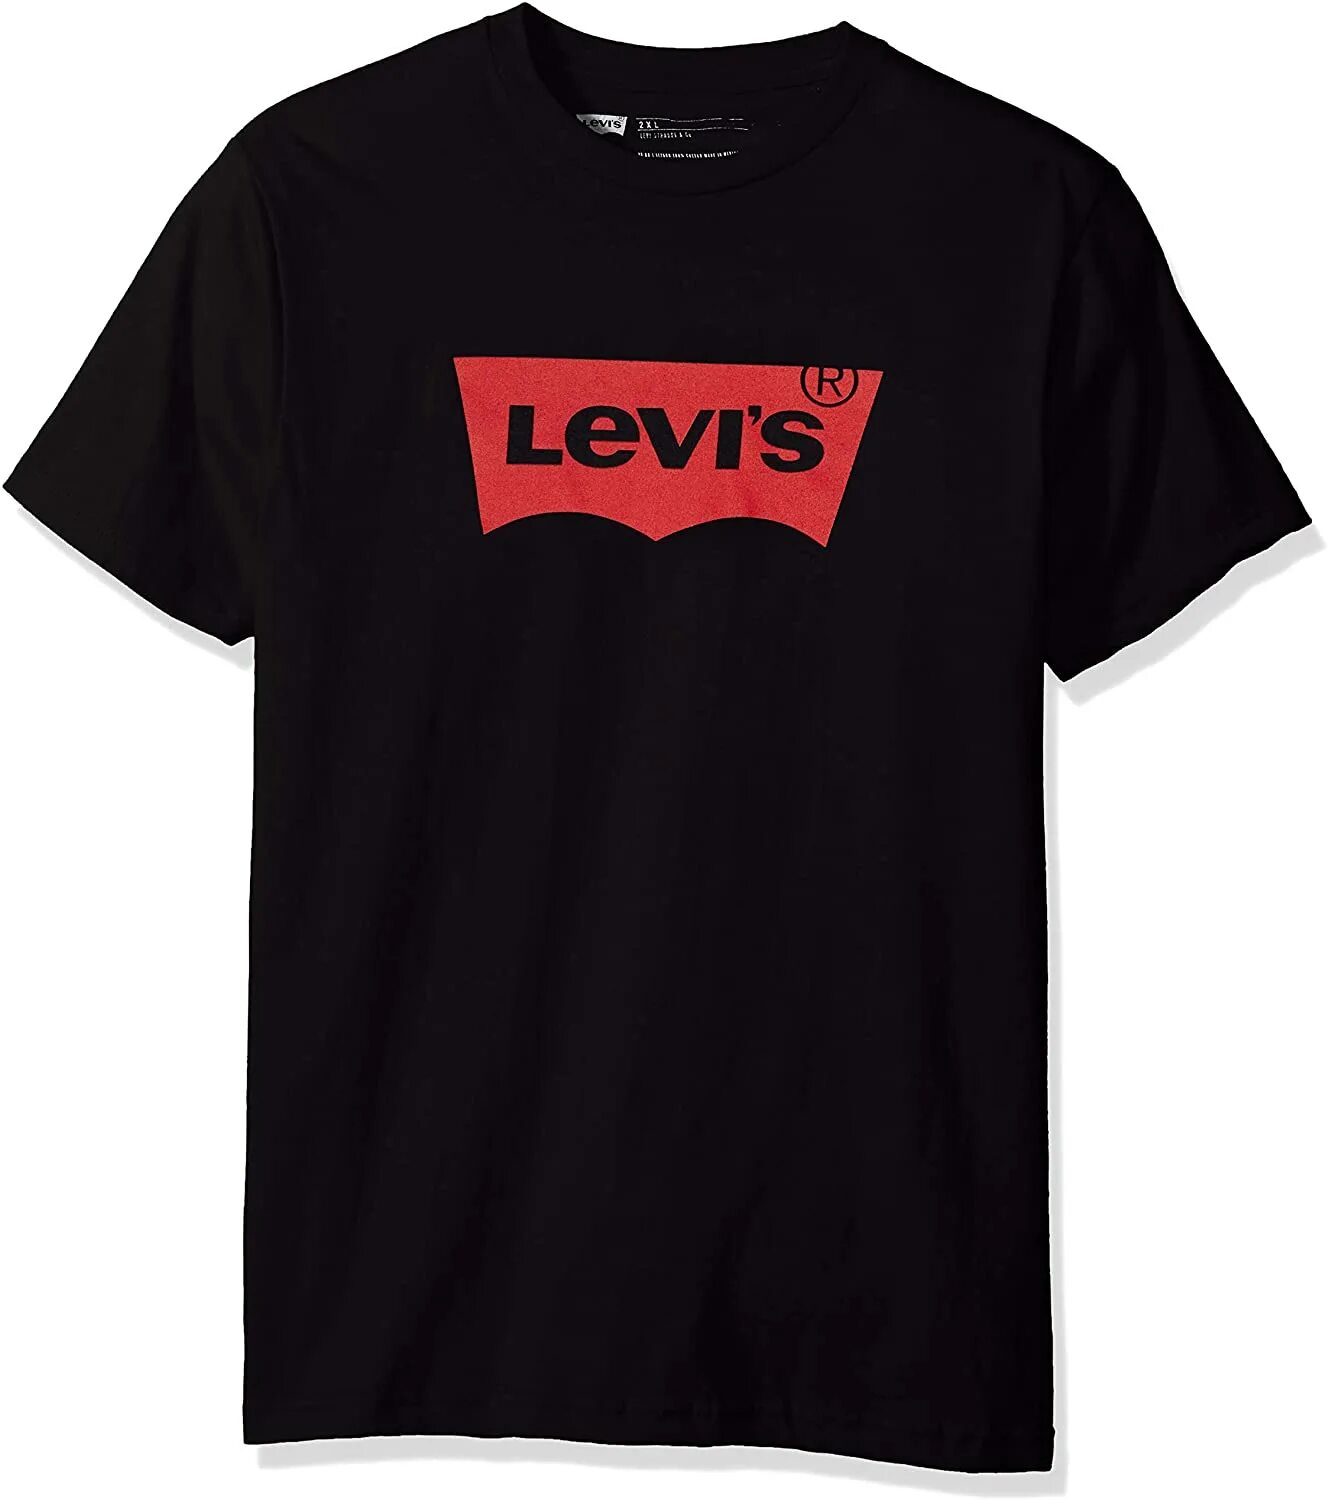 Левайс майка черная мужская. Levis футболка черная. Футболка Levi's мужская черная. Футболка Левис мужская черная.